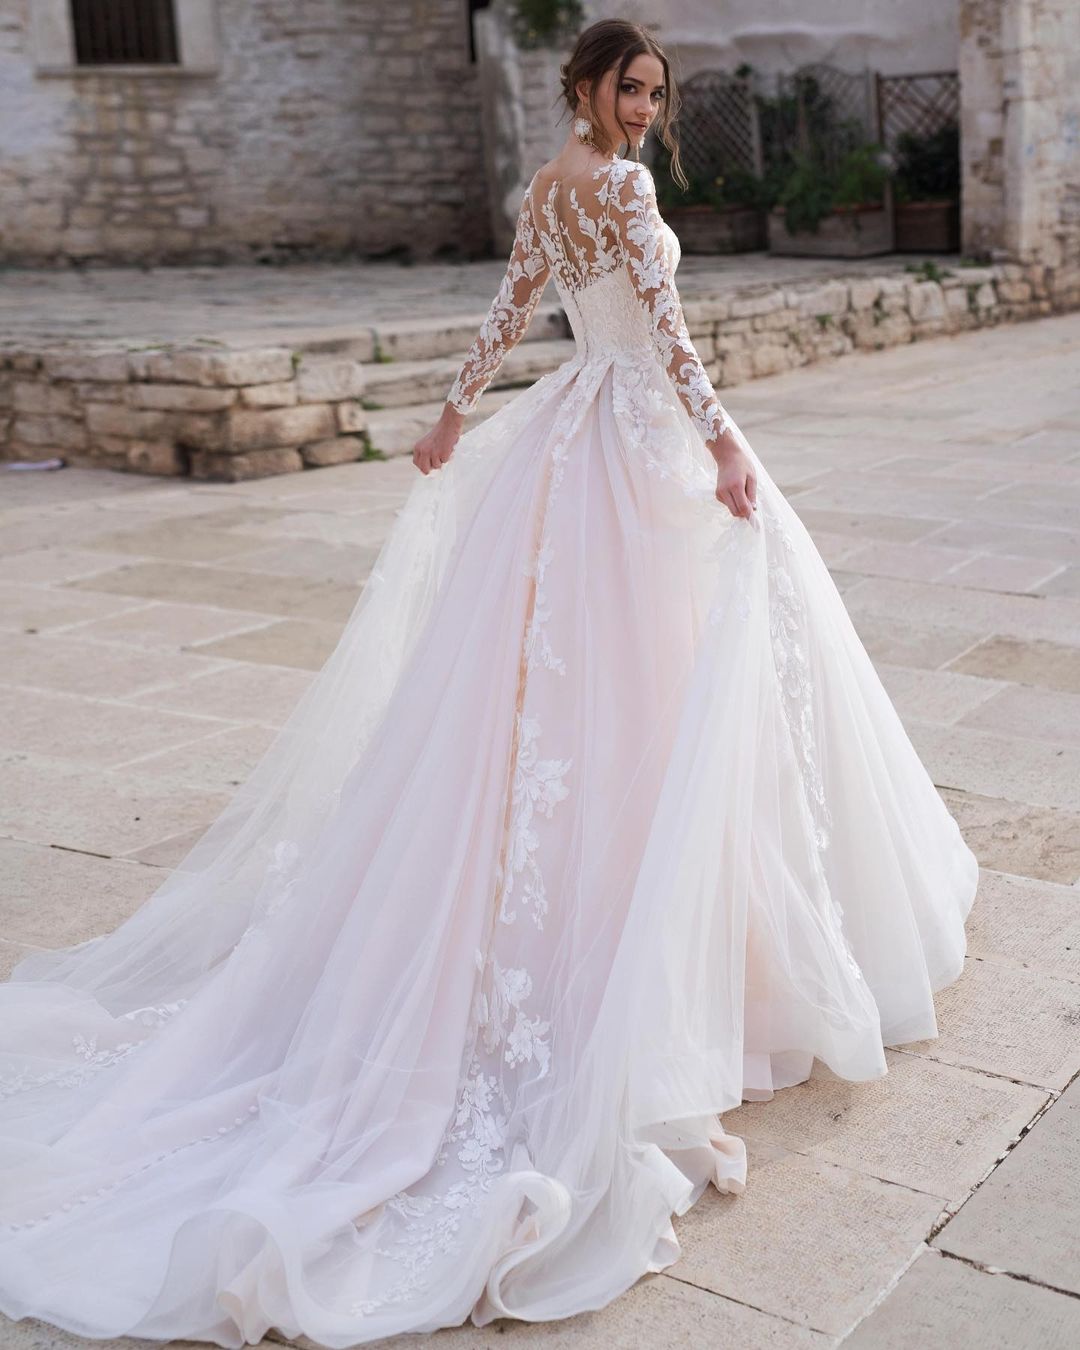 Blunny bridal lace wedding gowns.